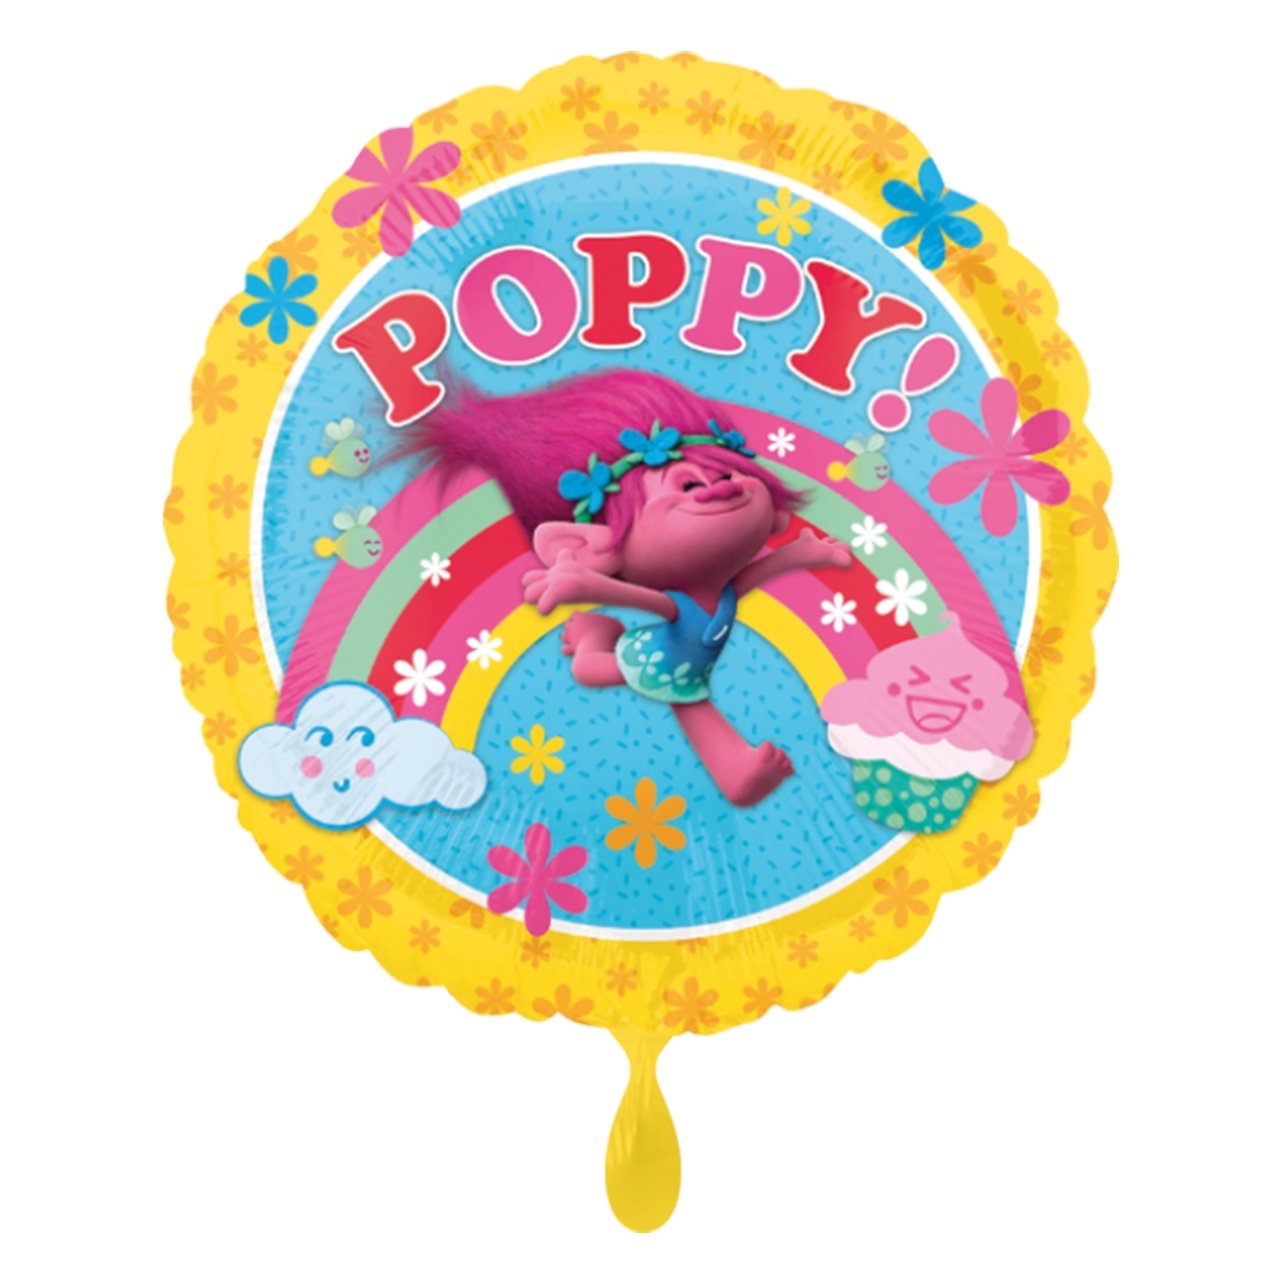 Folienballon "Trolls Poppy" 45cm - Party im Karton